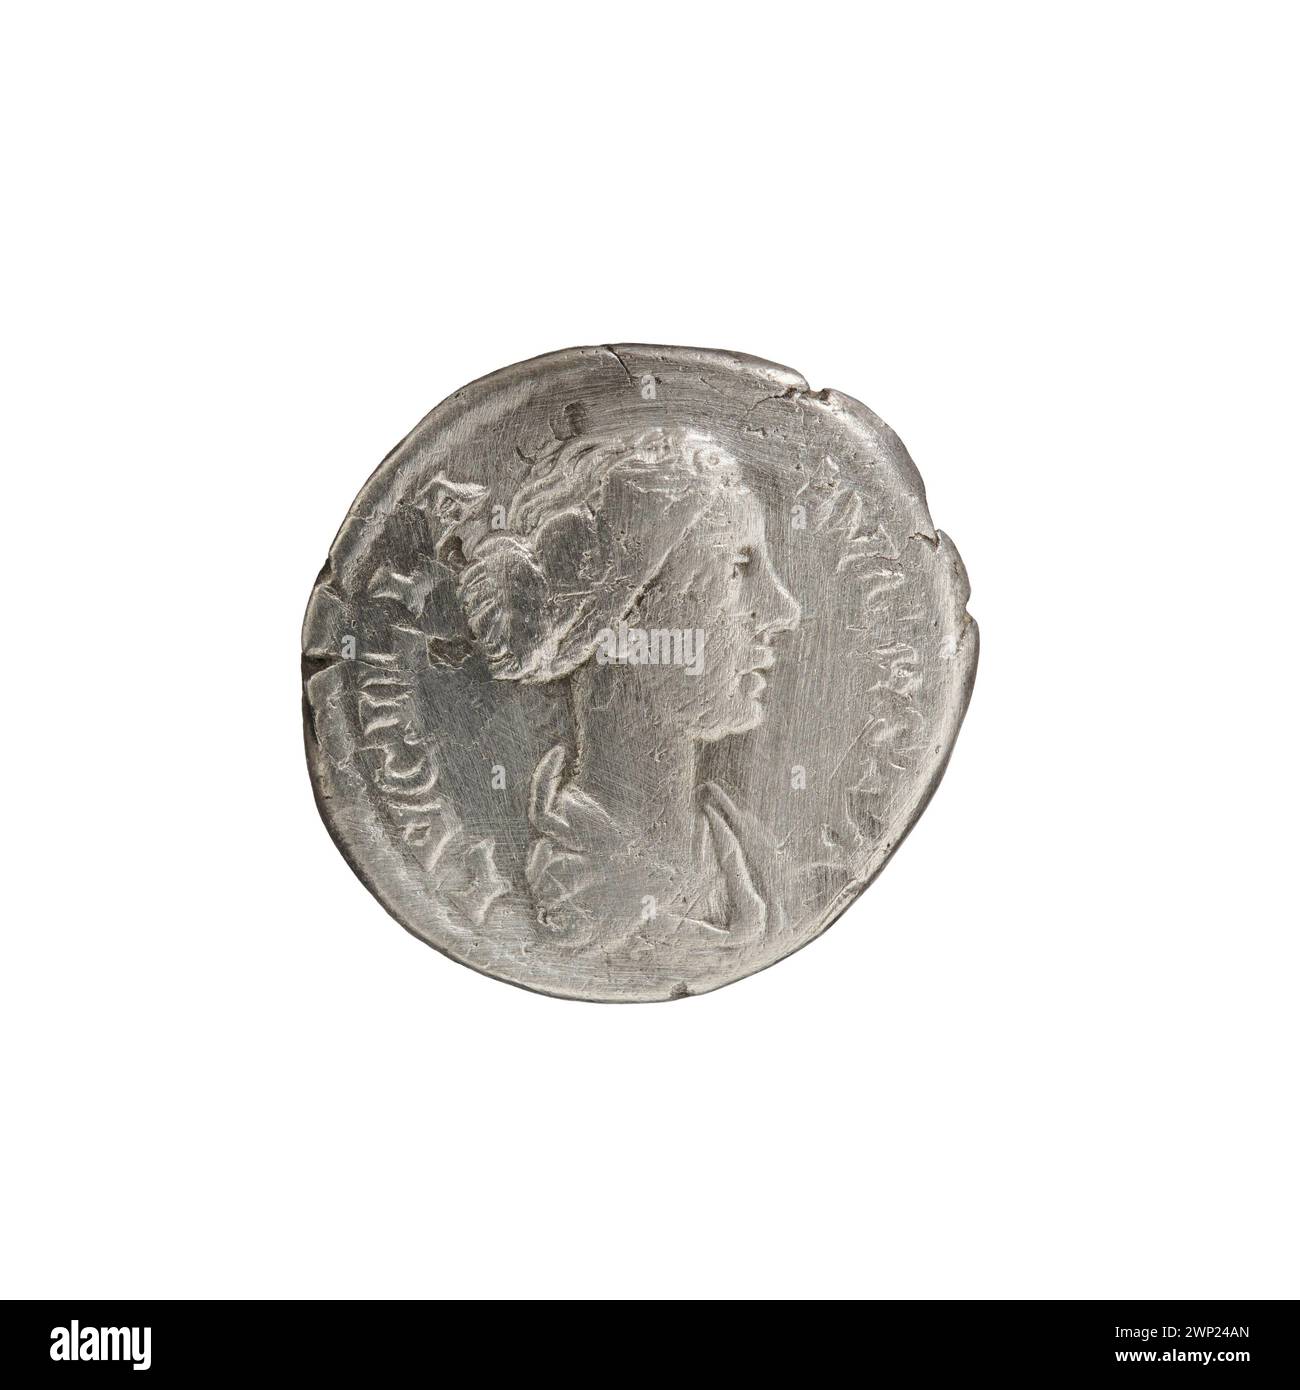 denarius; Lucius Werus (130-169; Roman emperor 161-169), Lucylla (149-182; Roman Empress 164-169); 164-169 (164-00-00-169-00-00); Stock Photo